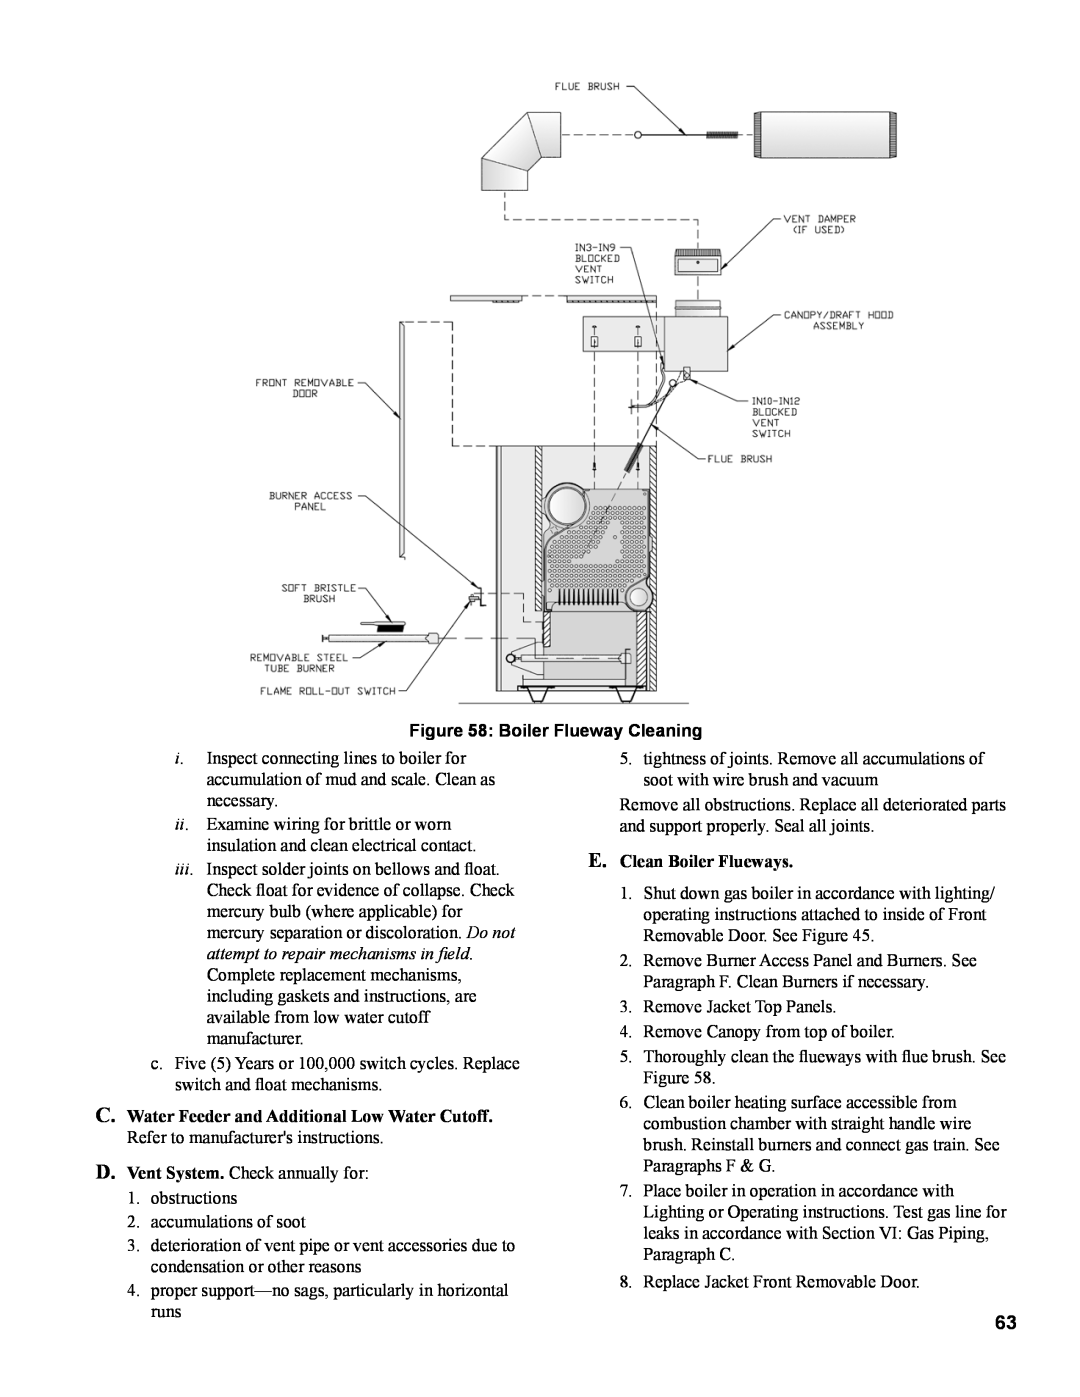 Burnham IN10 manual Boiler Flueway Cleaning, E. Clean Boiler Flueways 